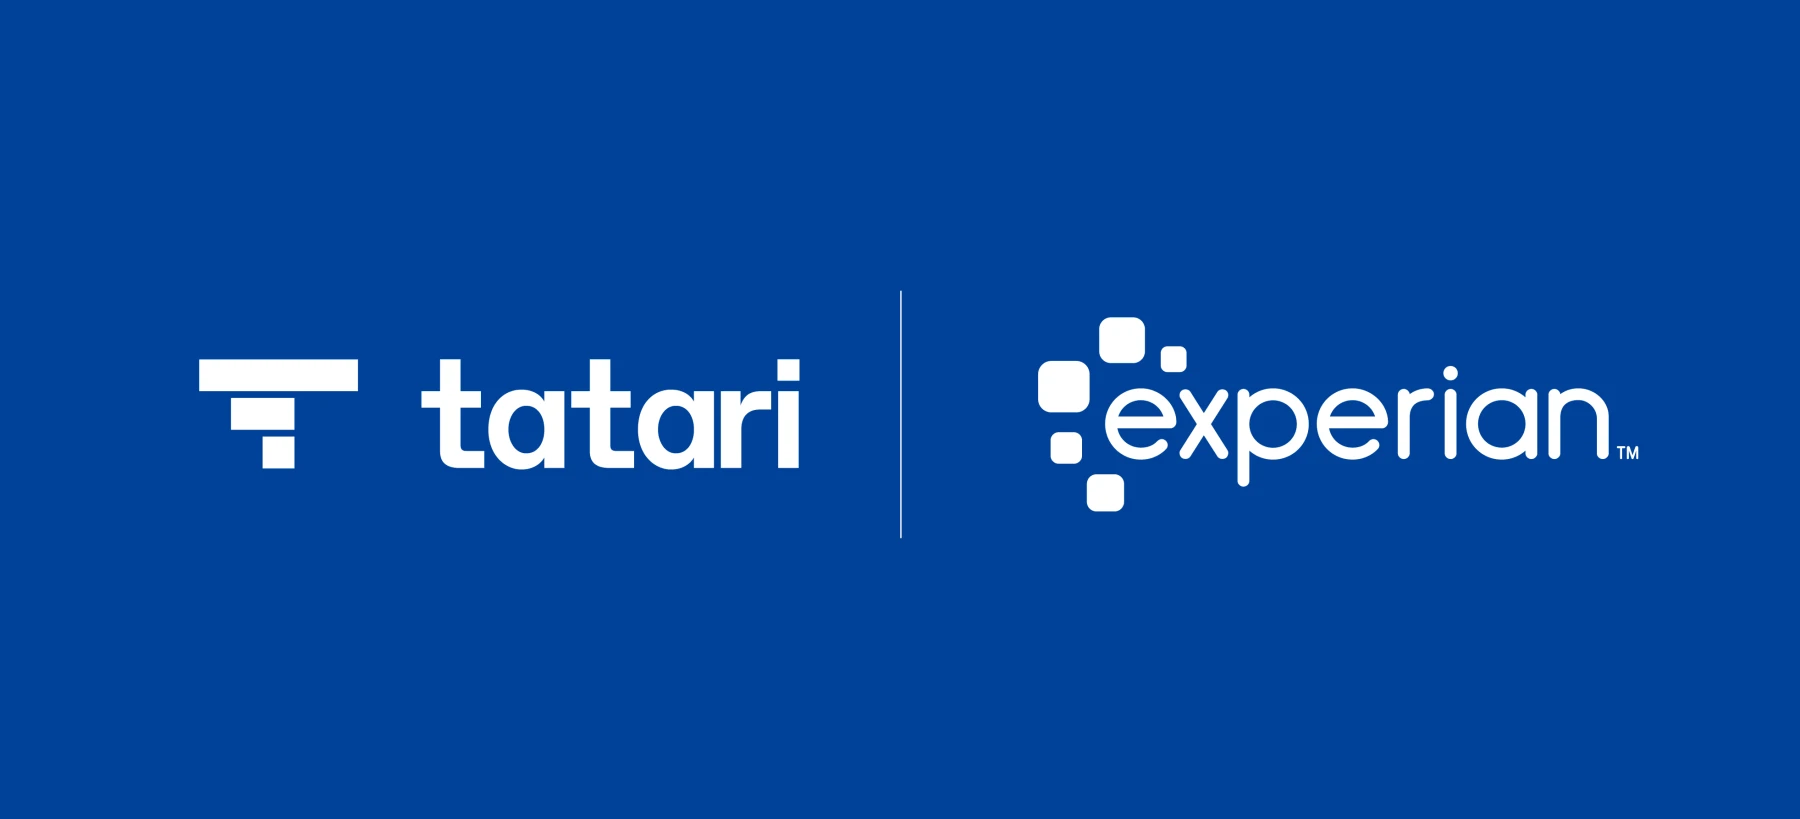 Experian Integrates with Tatari Banner